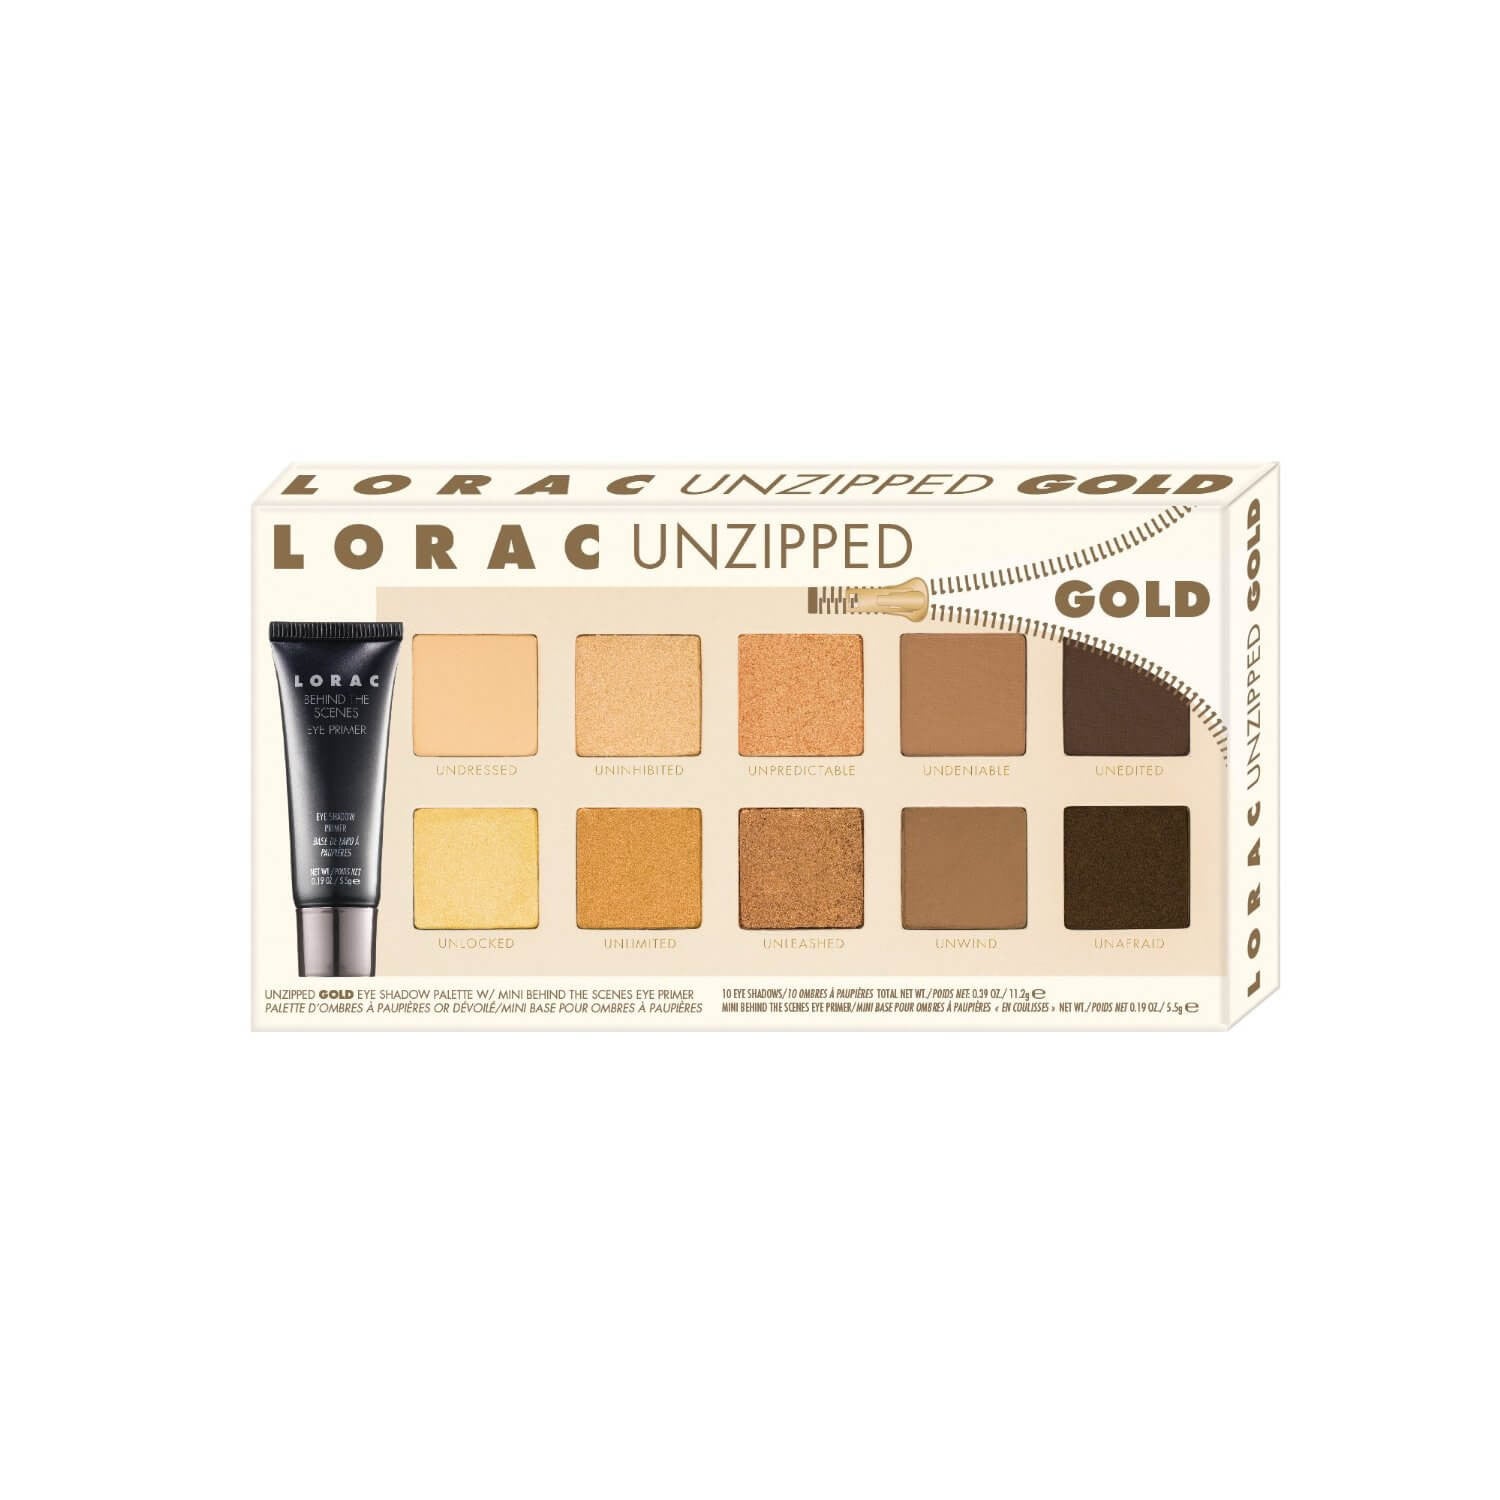 LORAC Unzipped Gold Palette Package